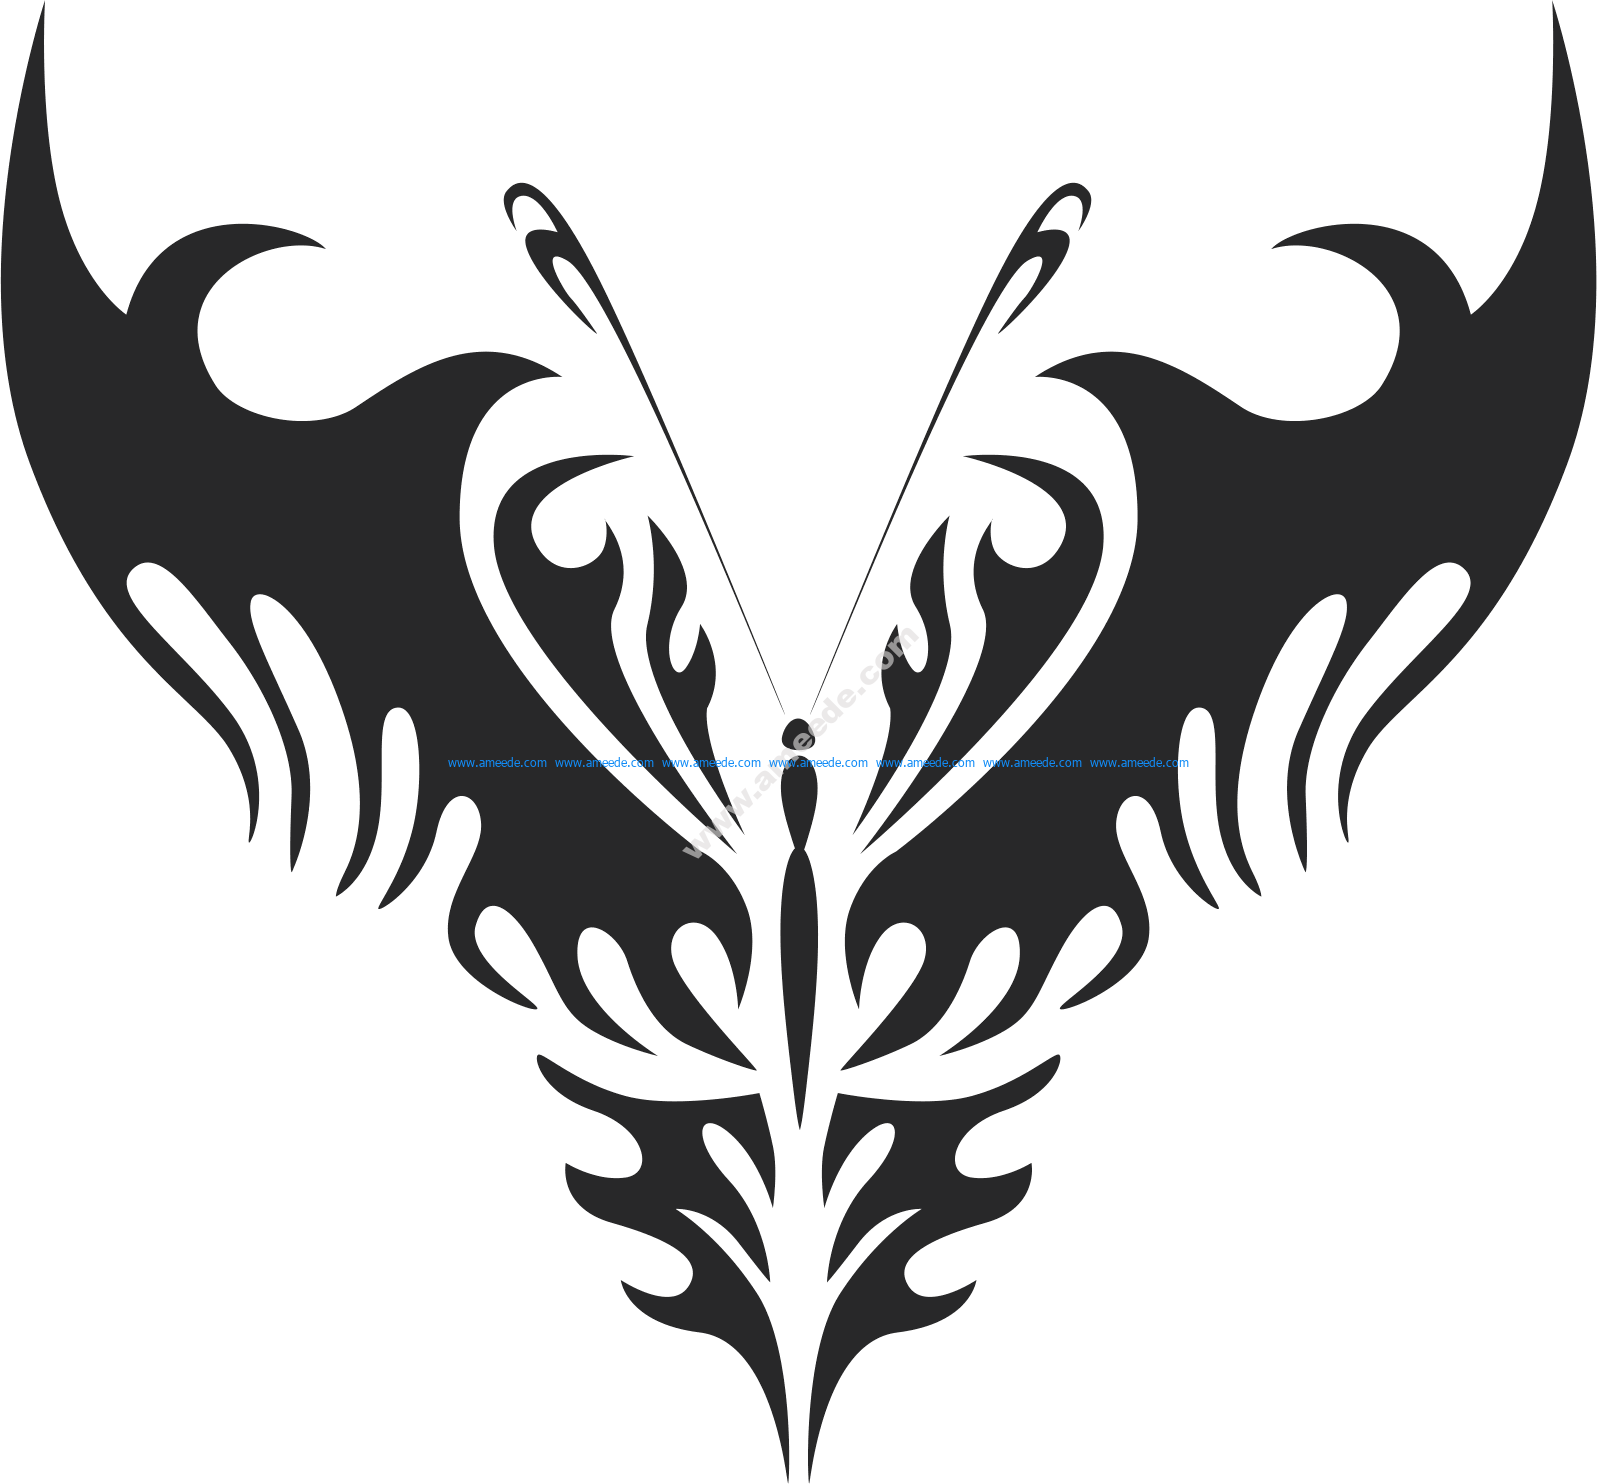 Download Tribal Butterfly Vector Art 24 - Download Vector